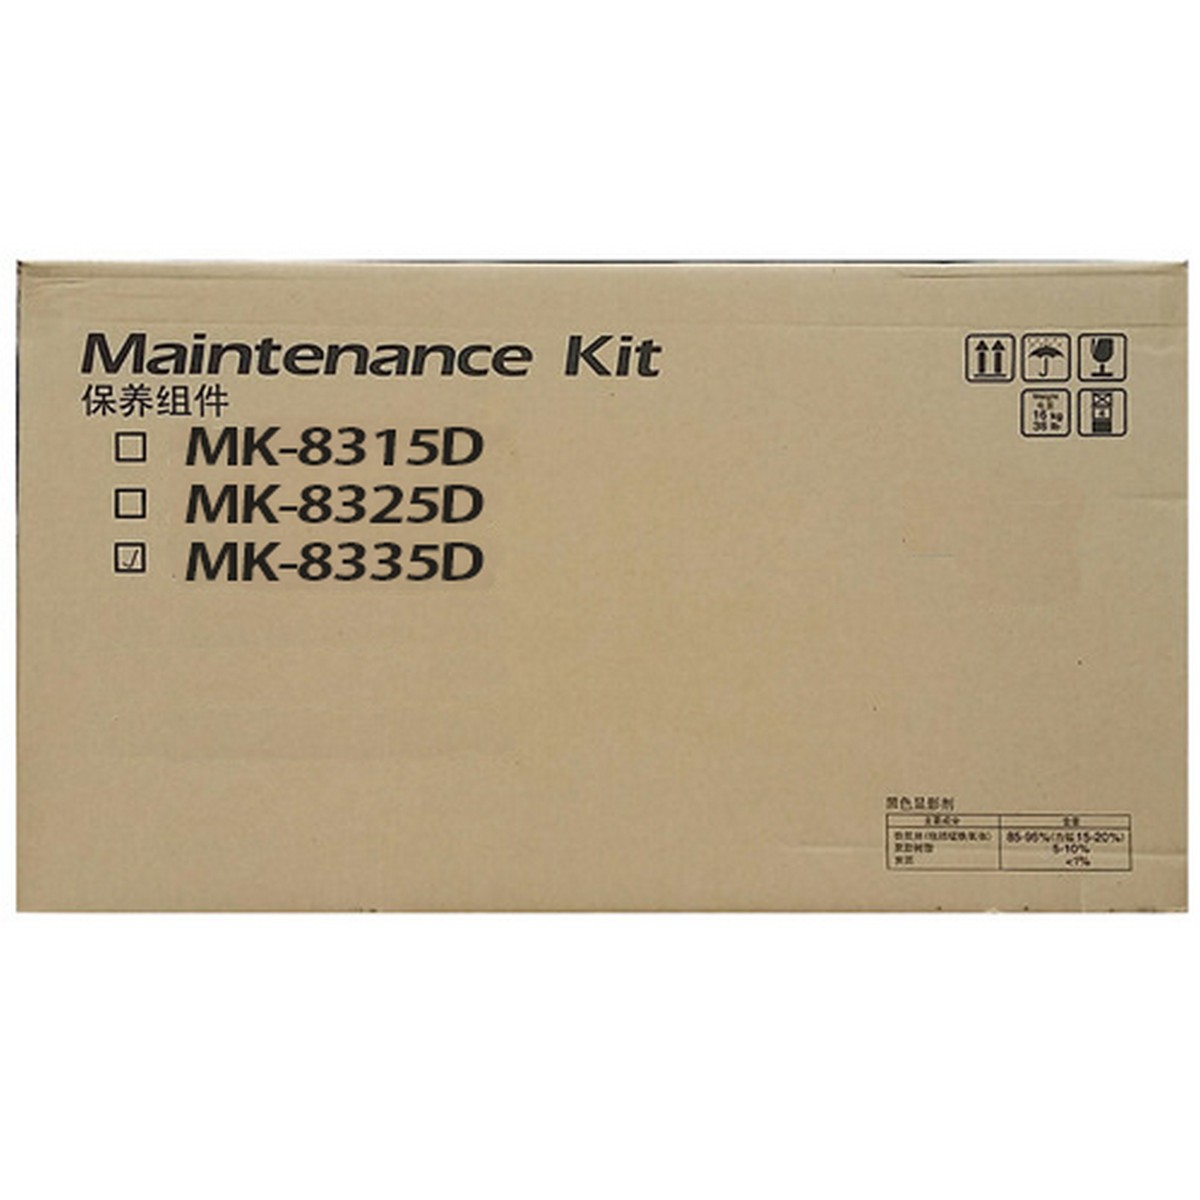 Maintenance Kit Copier Kyocera MK 8335D - 600K